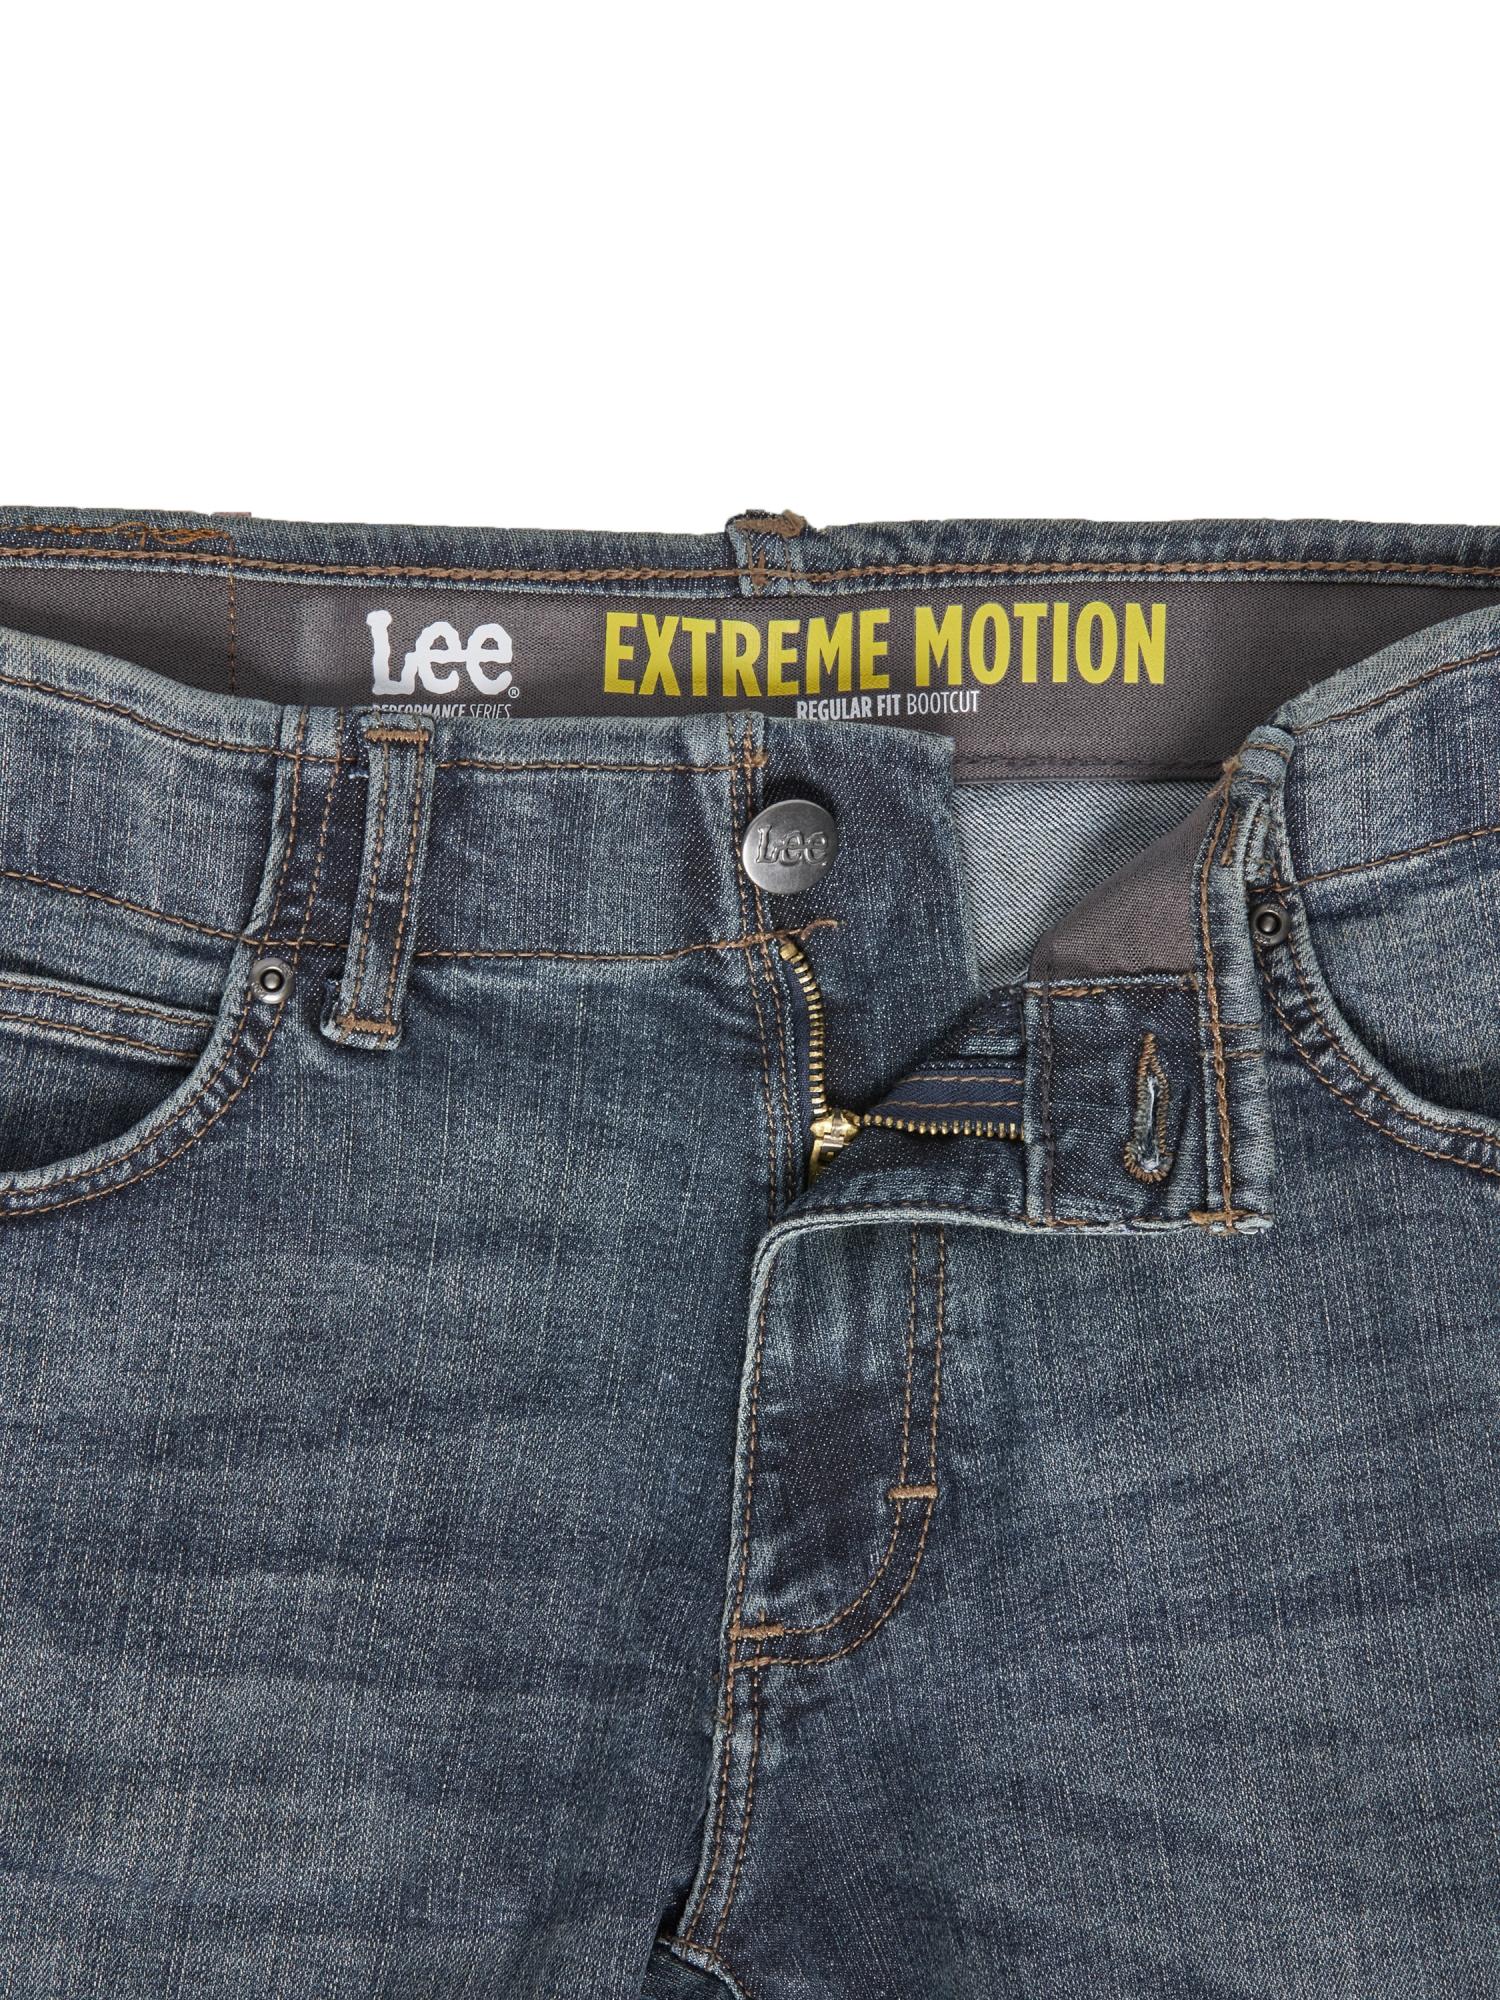 Boot Extreme Stores Renegade Cut Maverick Jeans | Fit Regular Lee Motion Mens